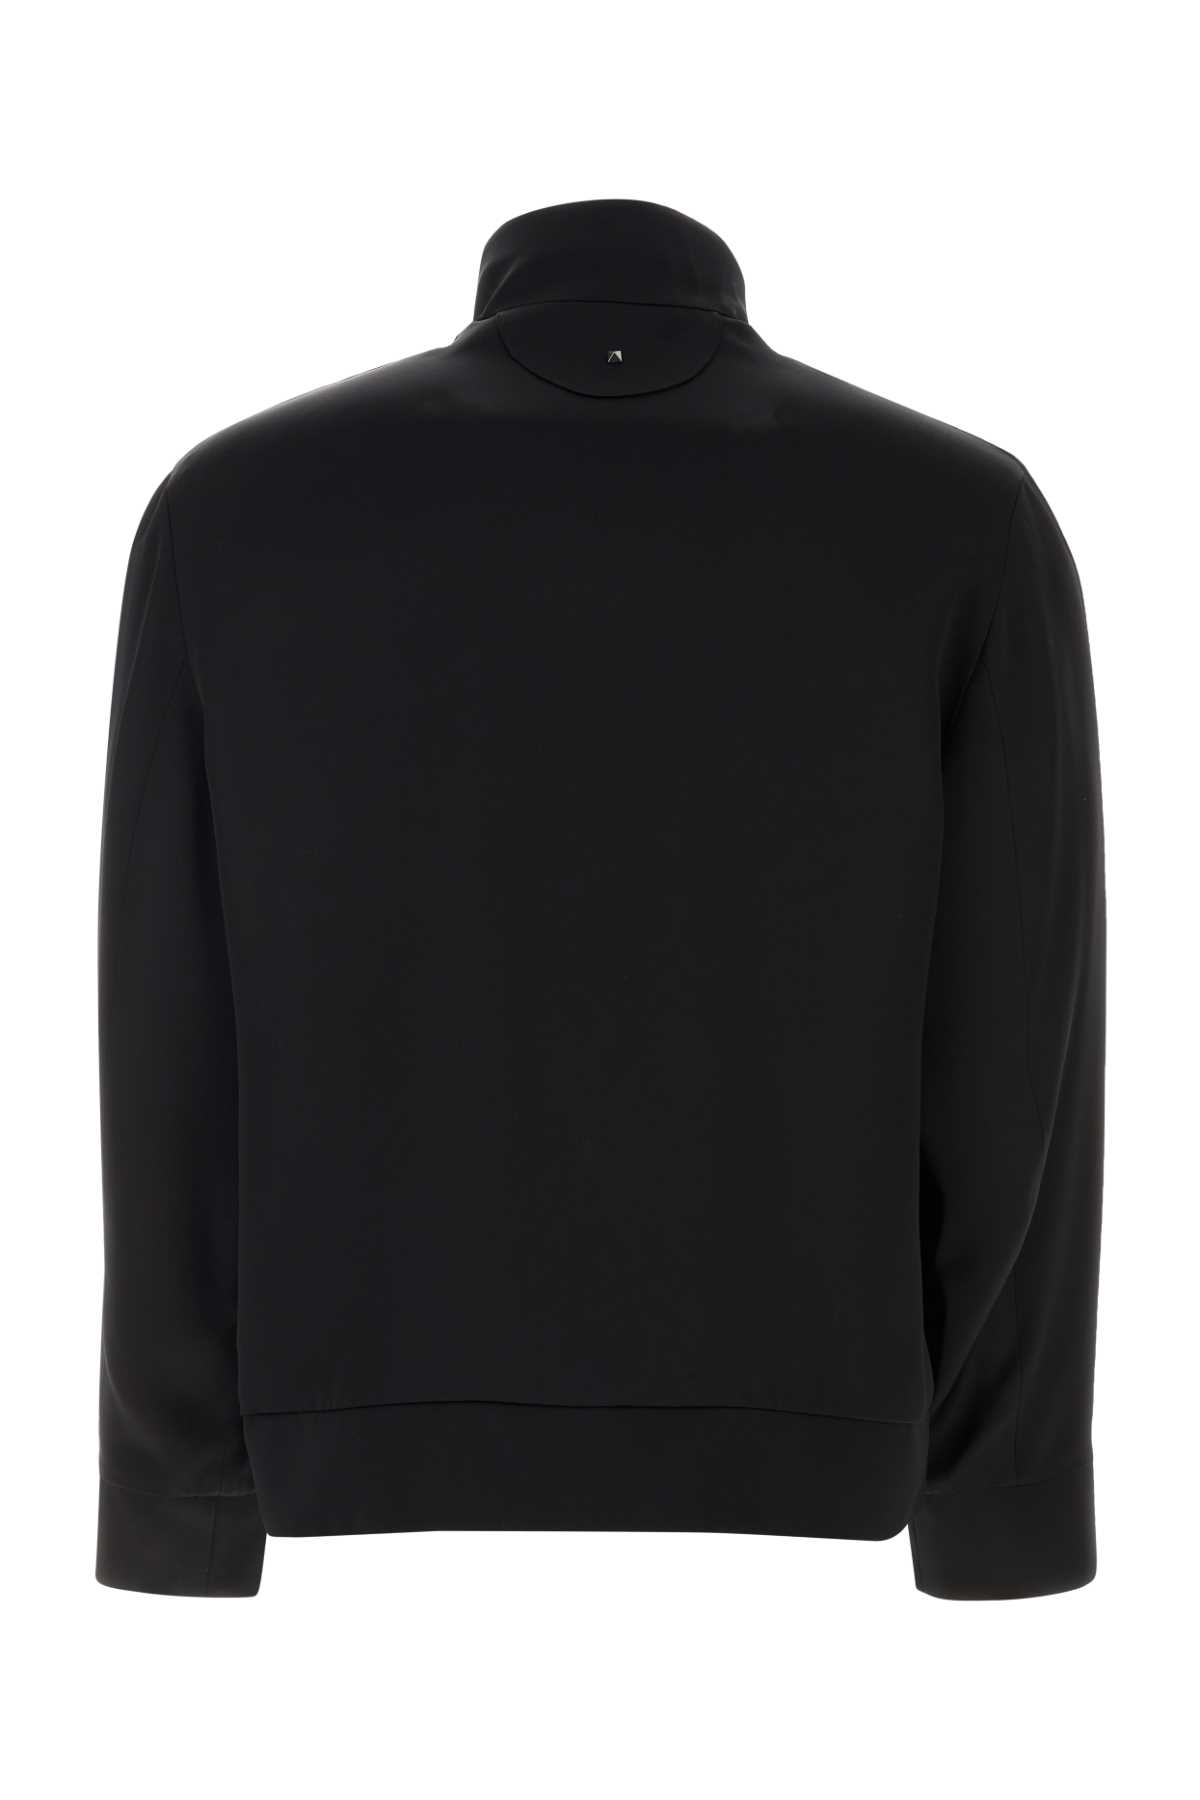 Valentino Black Satin Sweatshirt